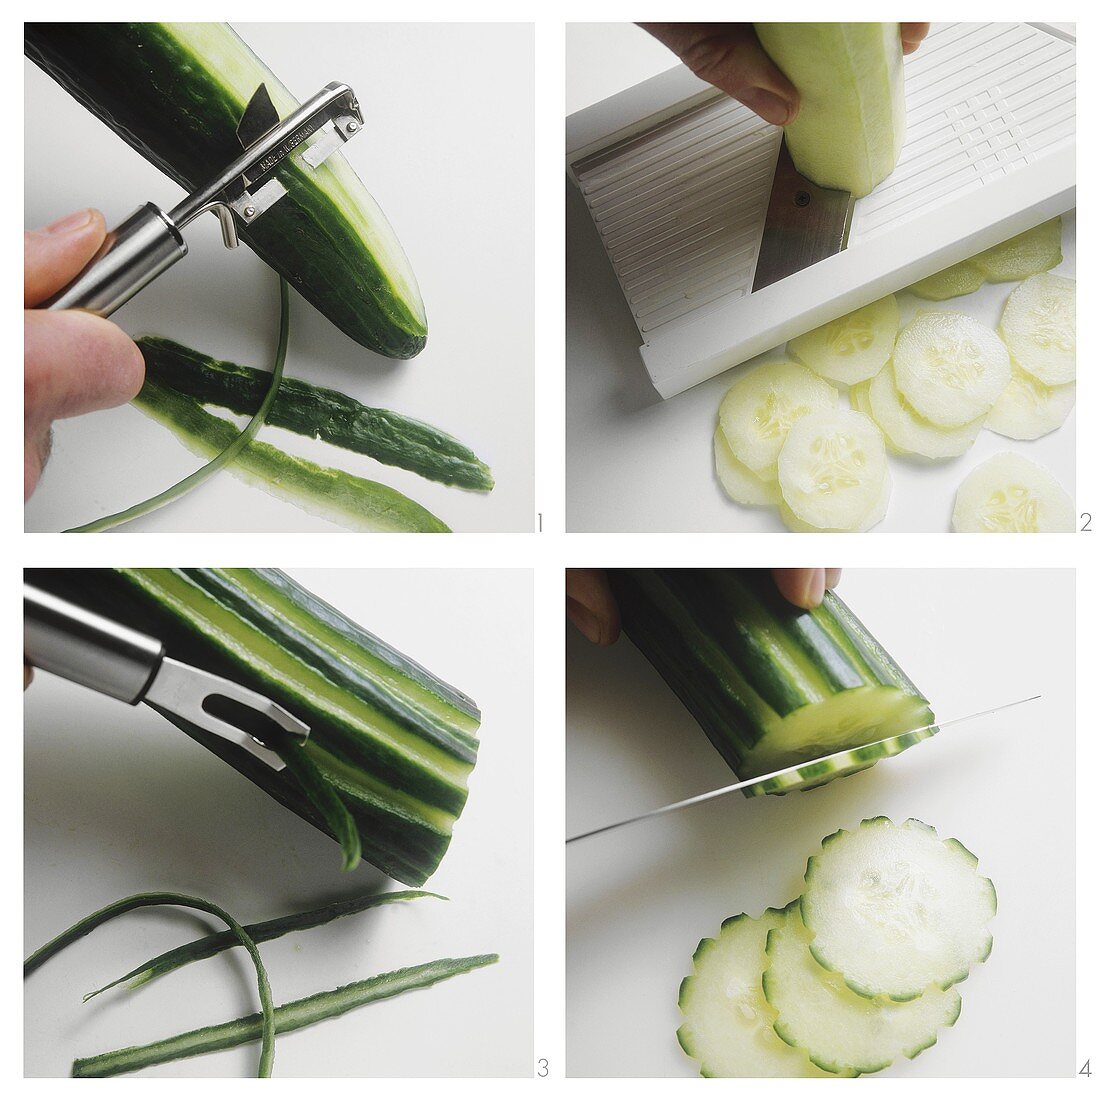 Peeling and slicing cucumber